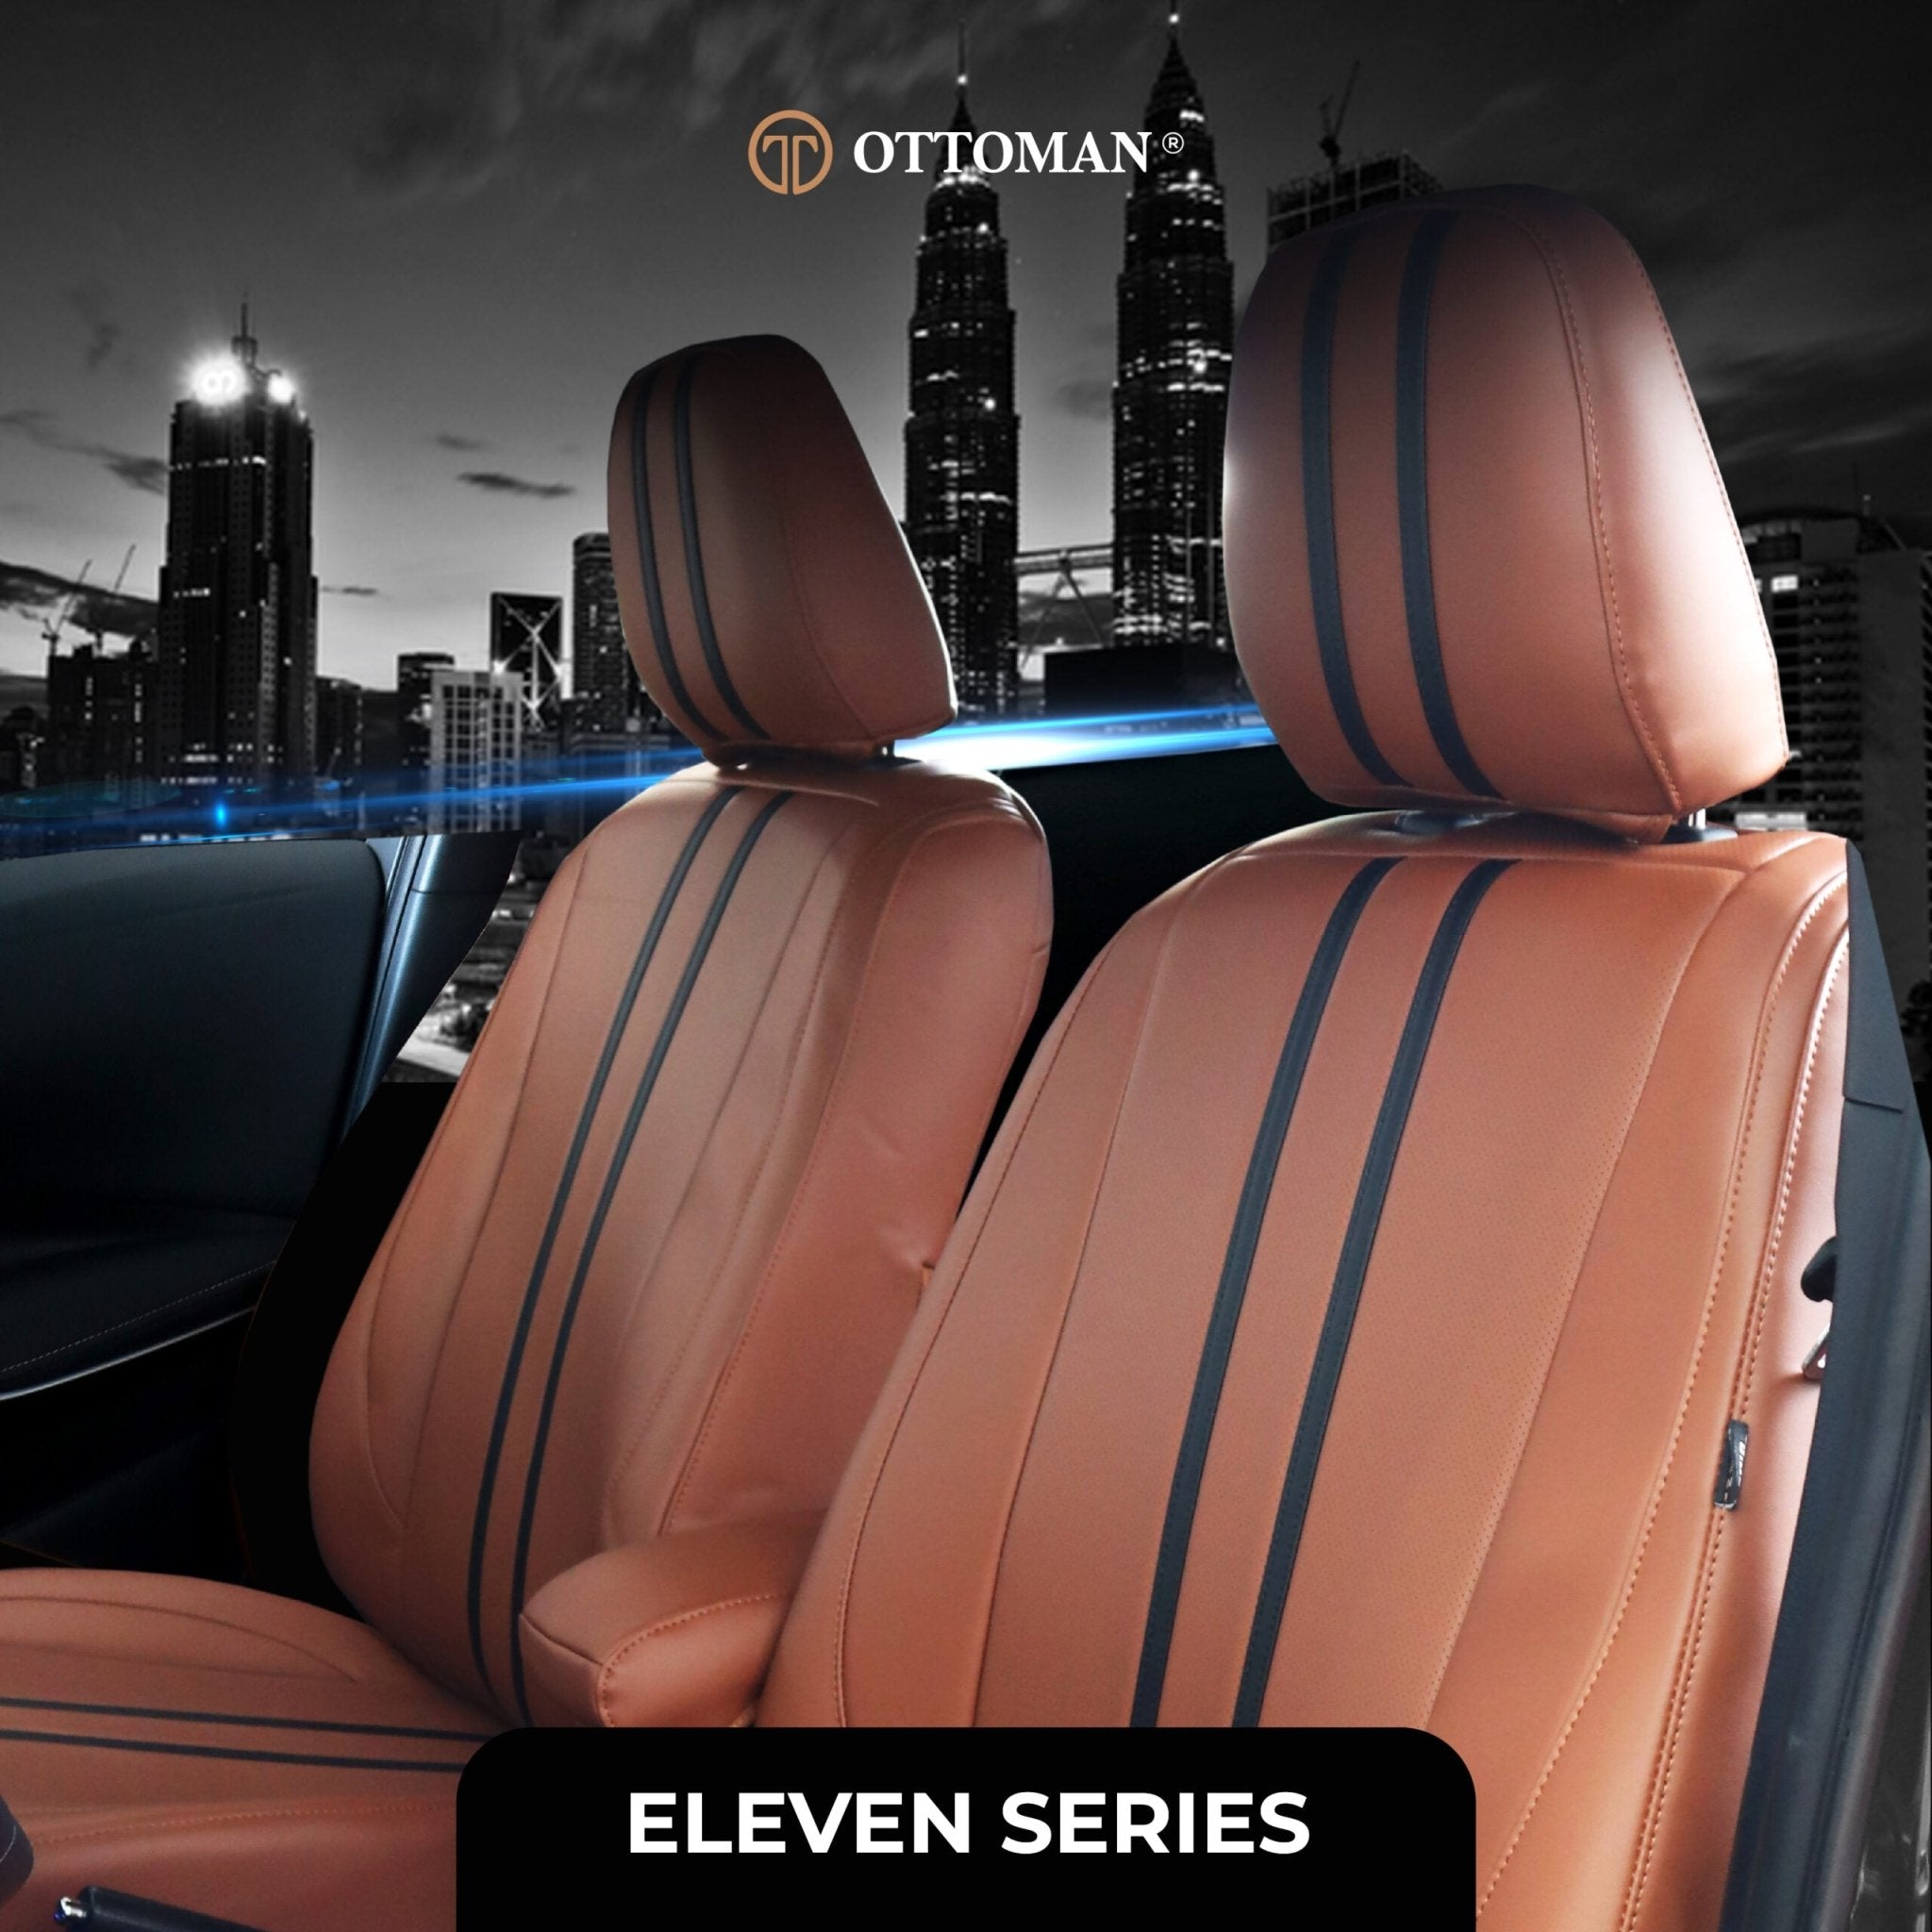 Honda HRV (2014-2021) Ottoman Seat Cover Seat Cover in Klang Selangor, Penang, Johor Bahru - Ottoman Car Mats